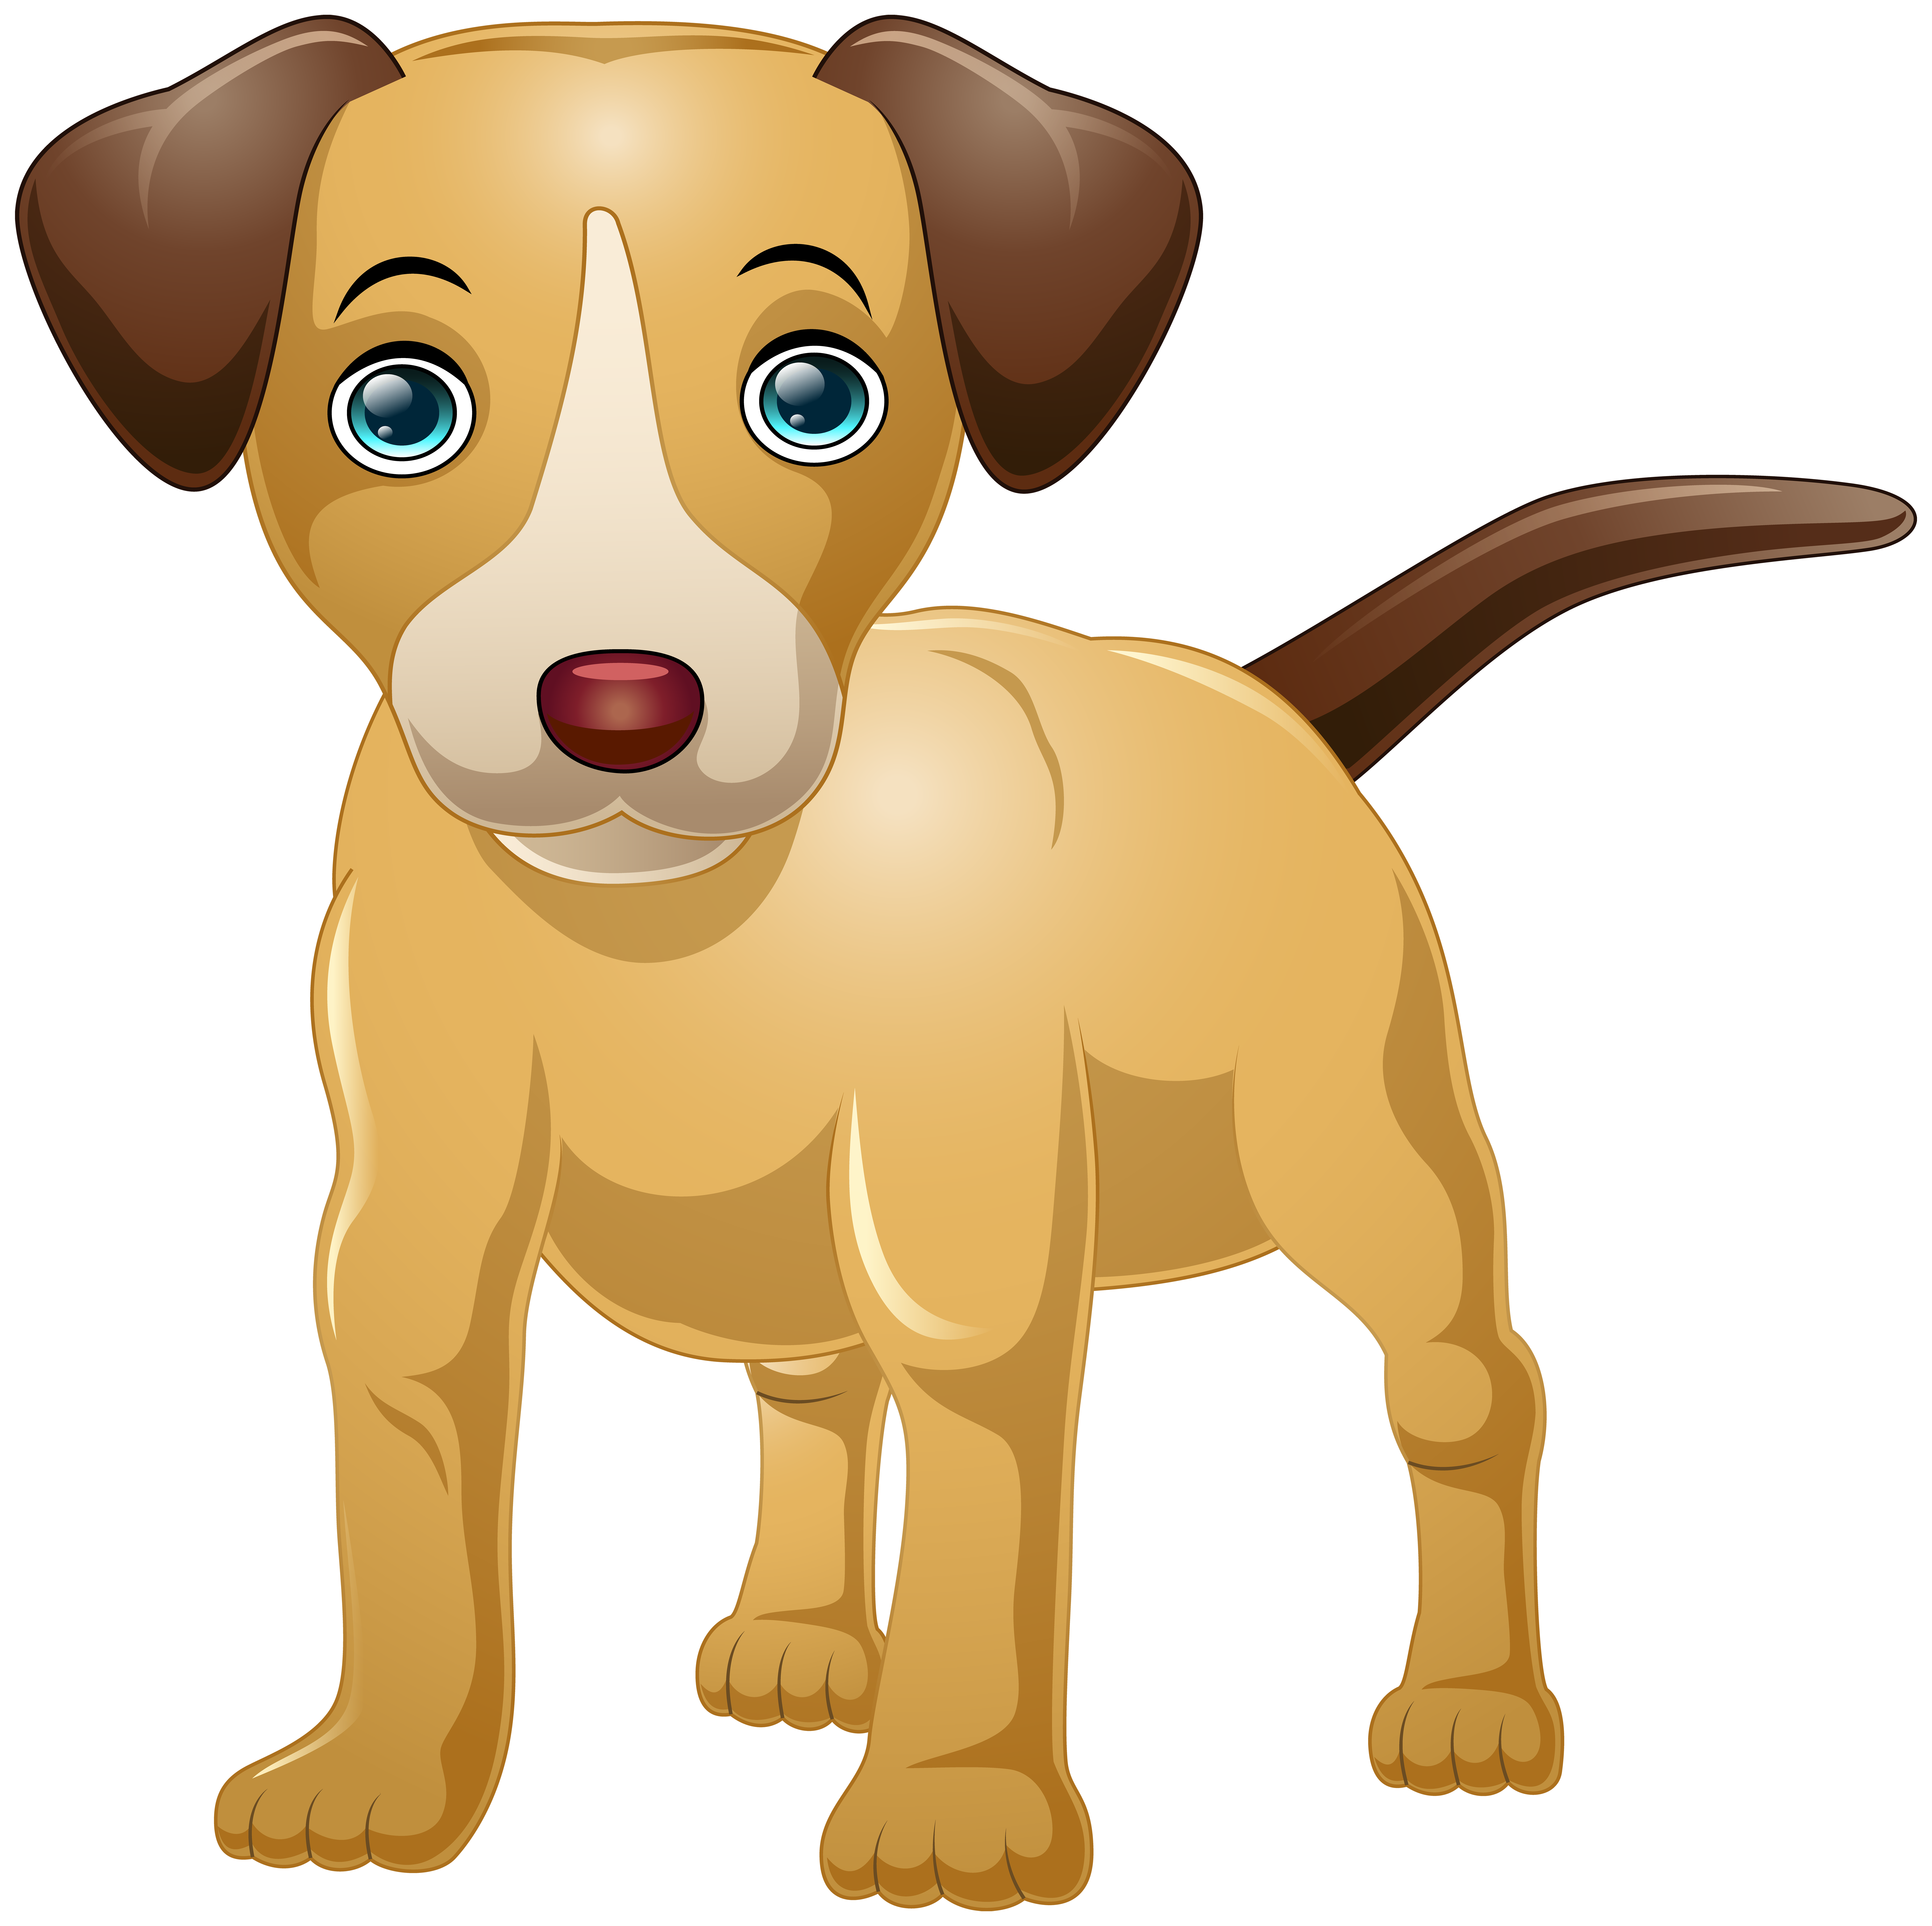 Pet Animated Images - Dog Puppy Cartoon Cuteness | Bodenswasuee